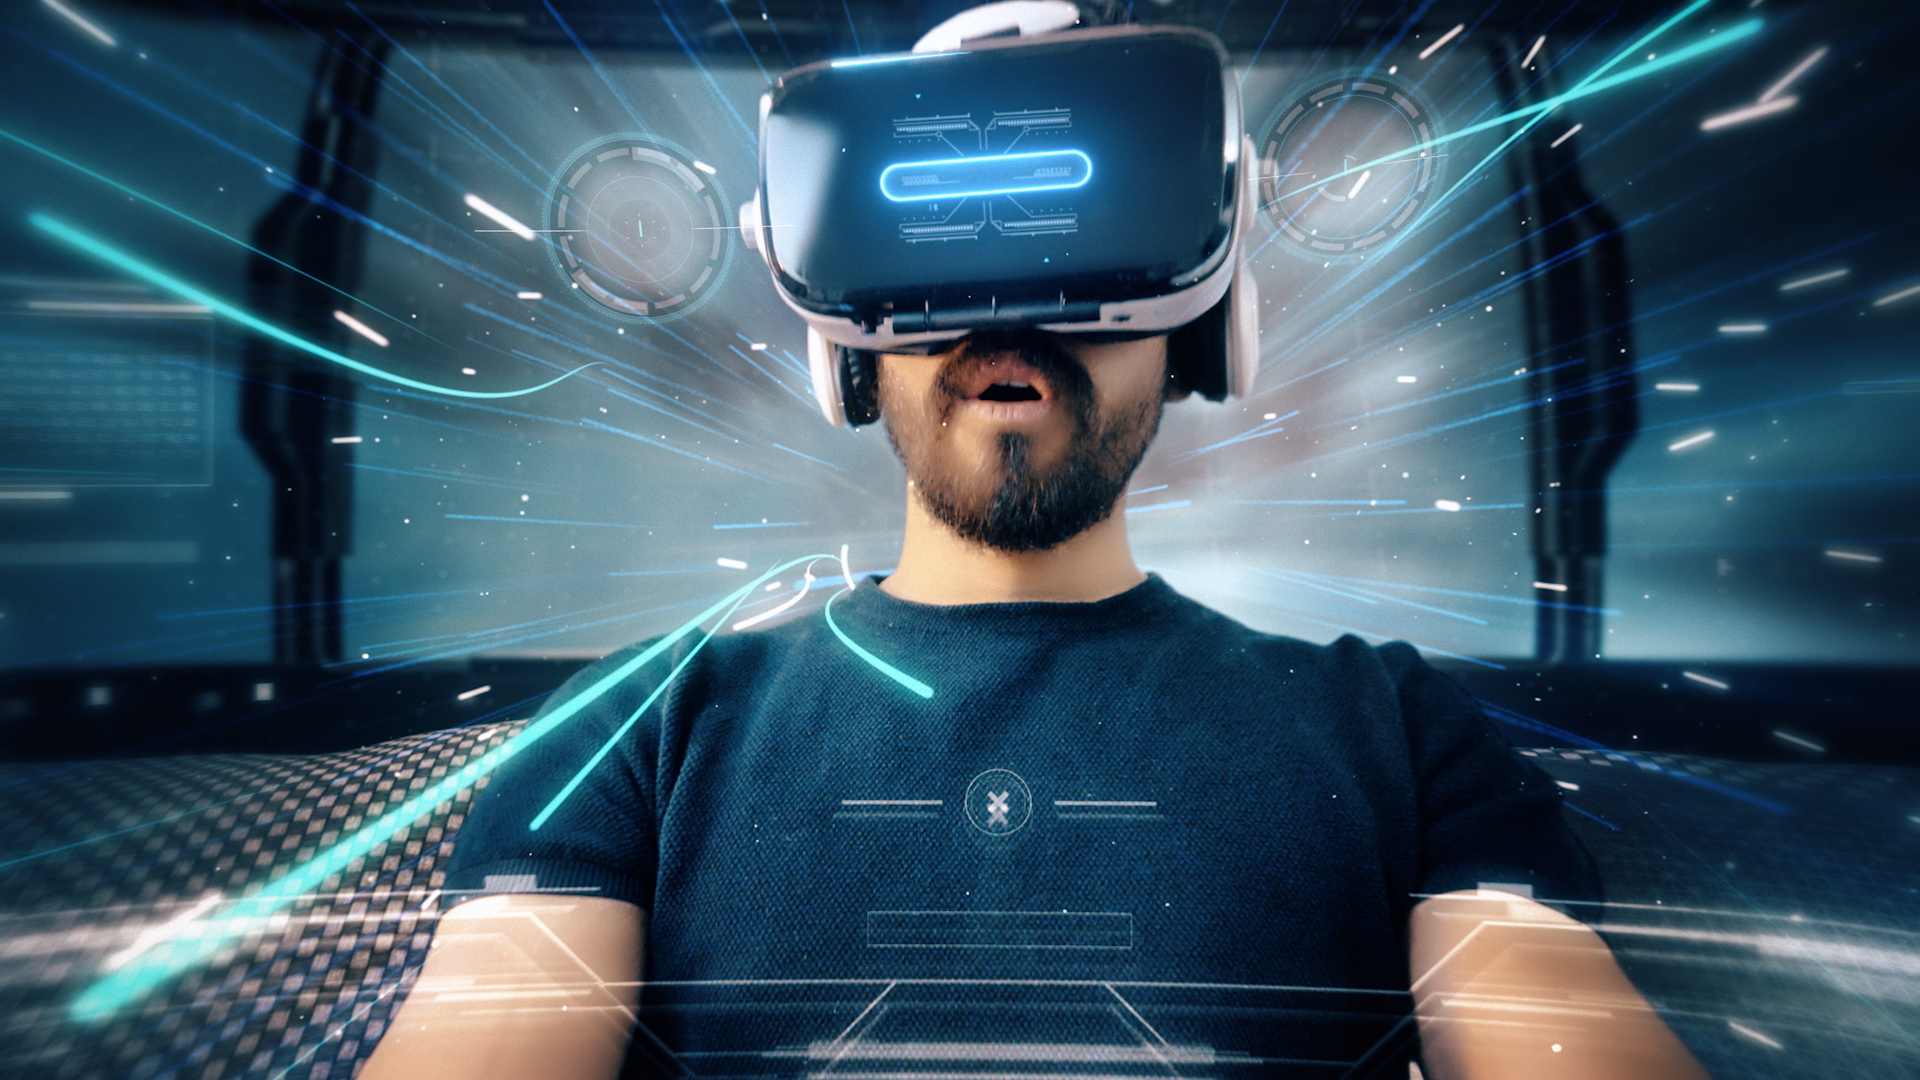 Виртуальный мир 3 2. Виртуальная реальность (Virtual reality, VR). Визуальная реальность. Иртуальная реальность. Человек в шлеме виртуальной реальности.